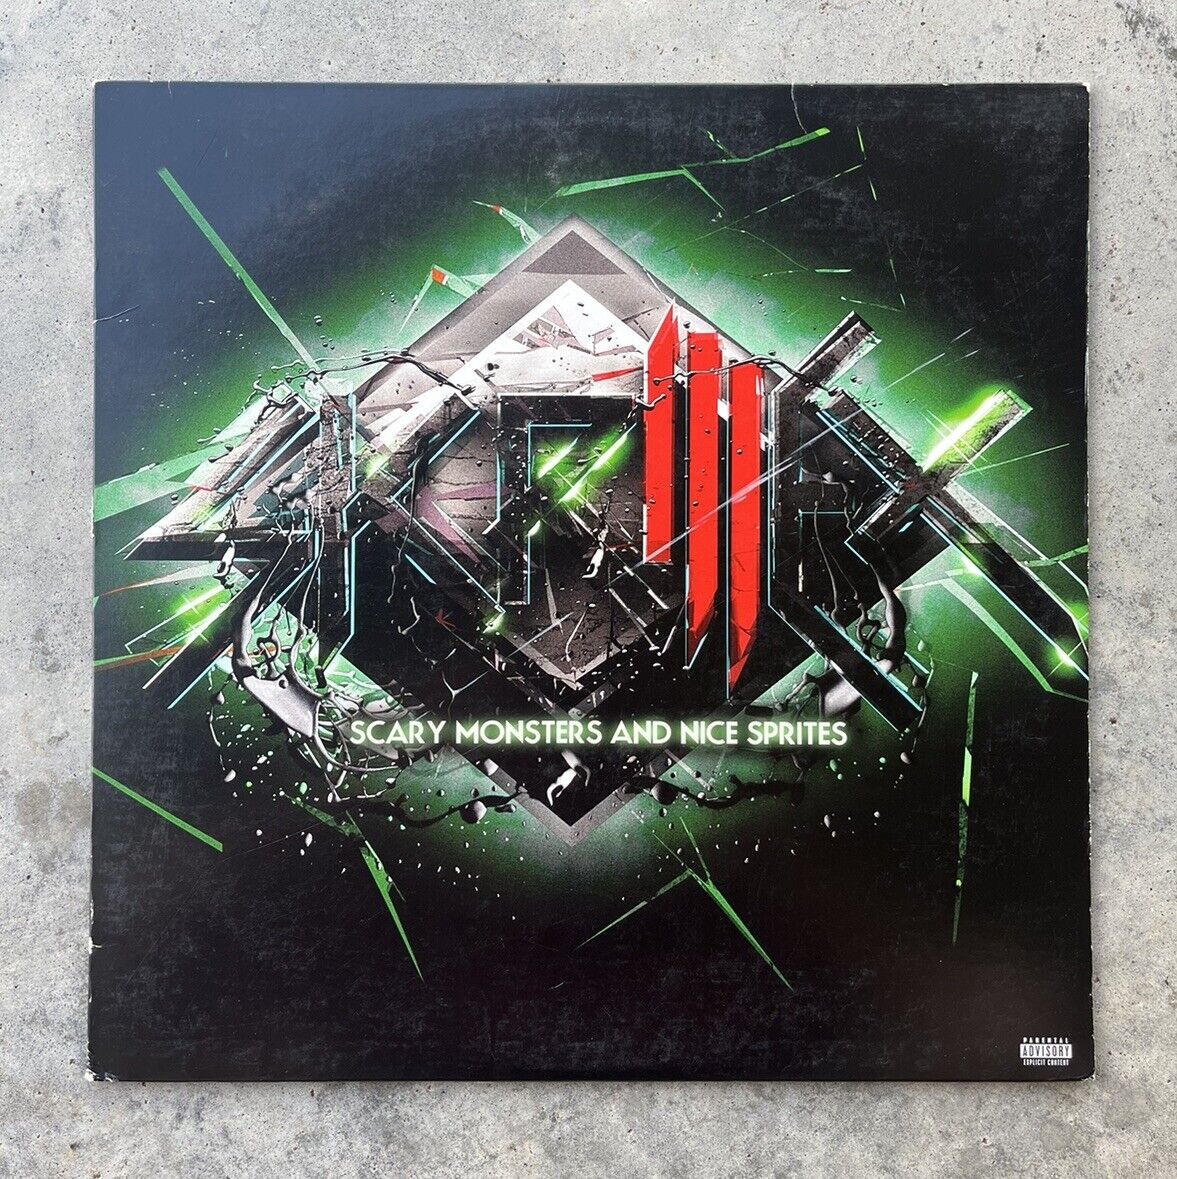 [Vinyl LP] Skrillex - Scary Monsters and Nice Sprites EP - RARE